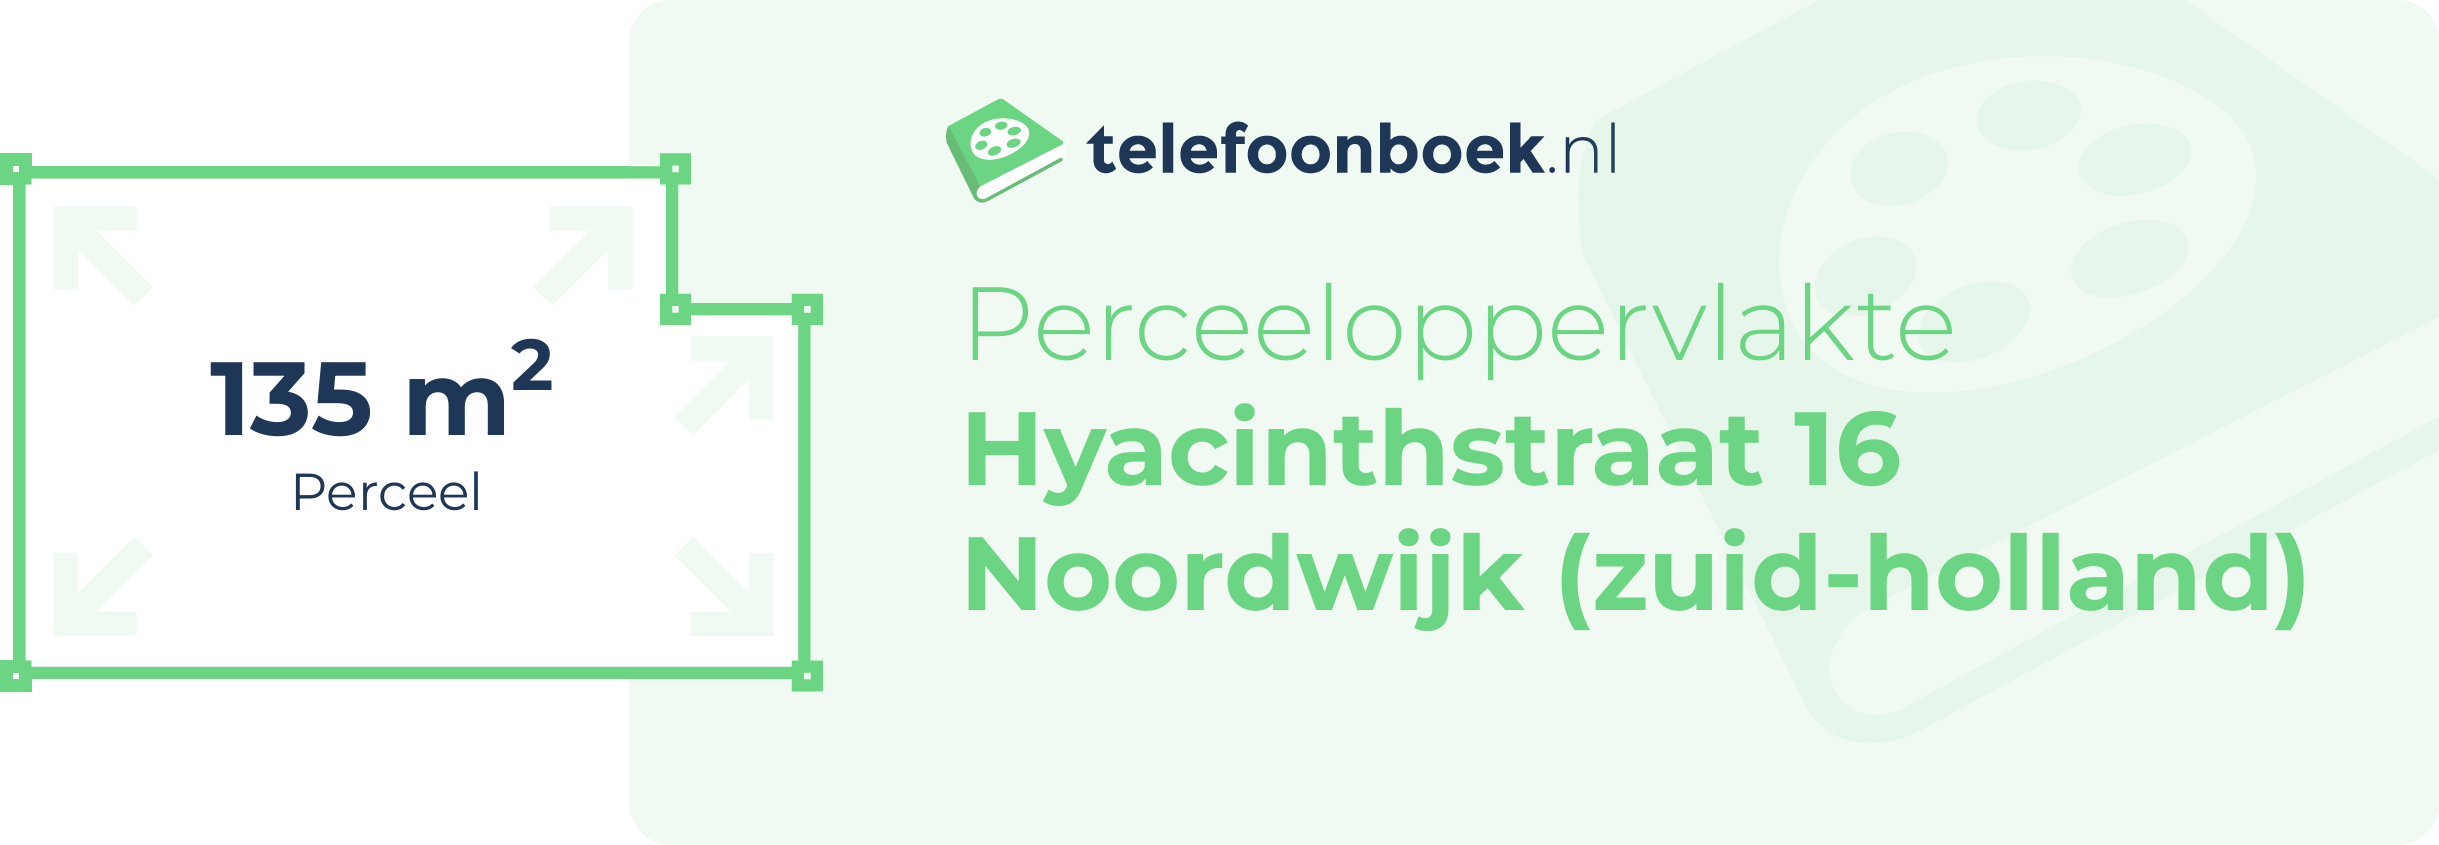 Perceeloppervlakte Hyacinthstraat 16 Noordwijk (Zuid-Holland)